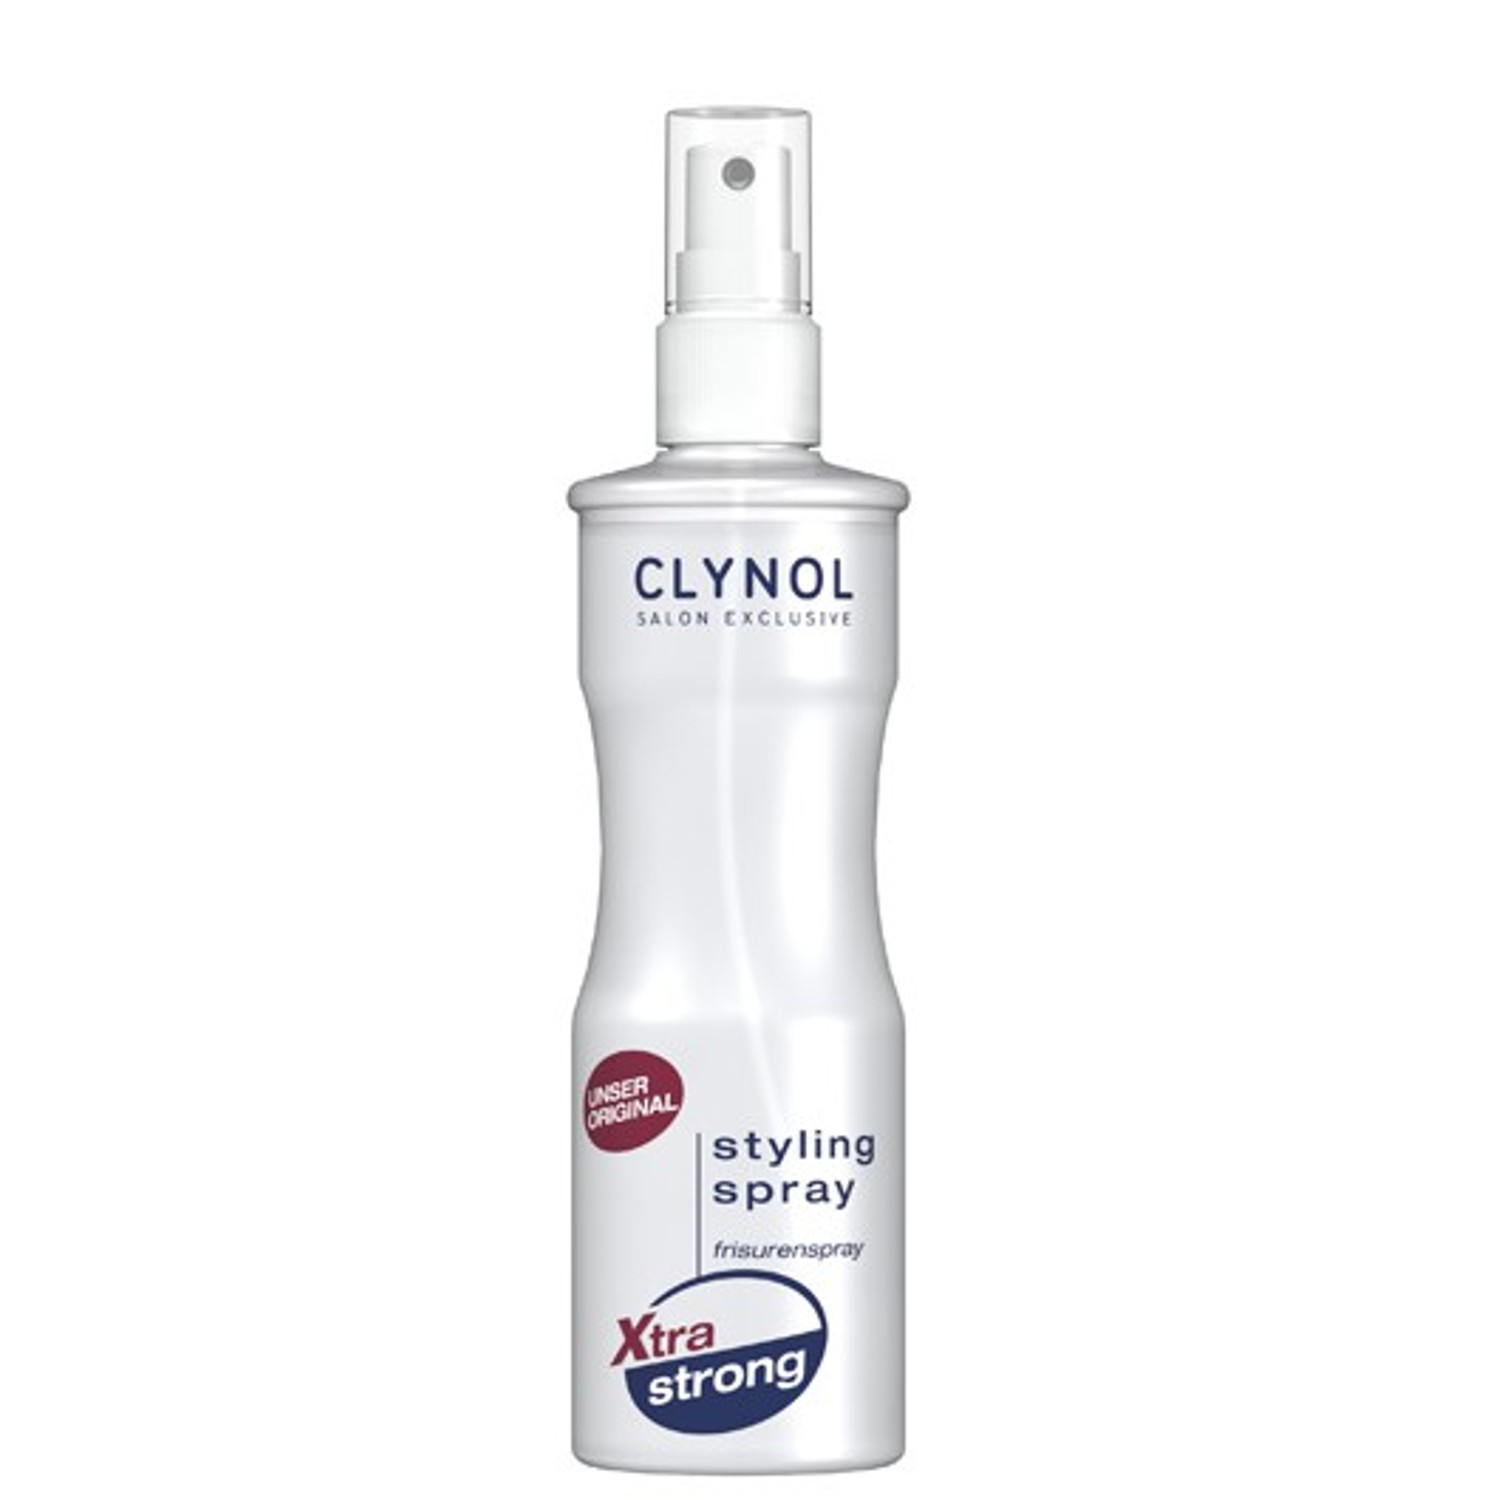 Clynol STYLING SPRAY extra strong 100 ml